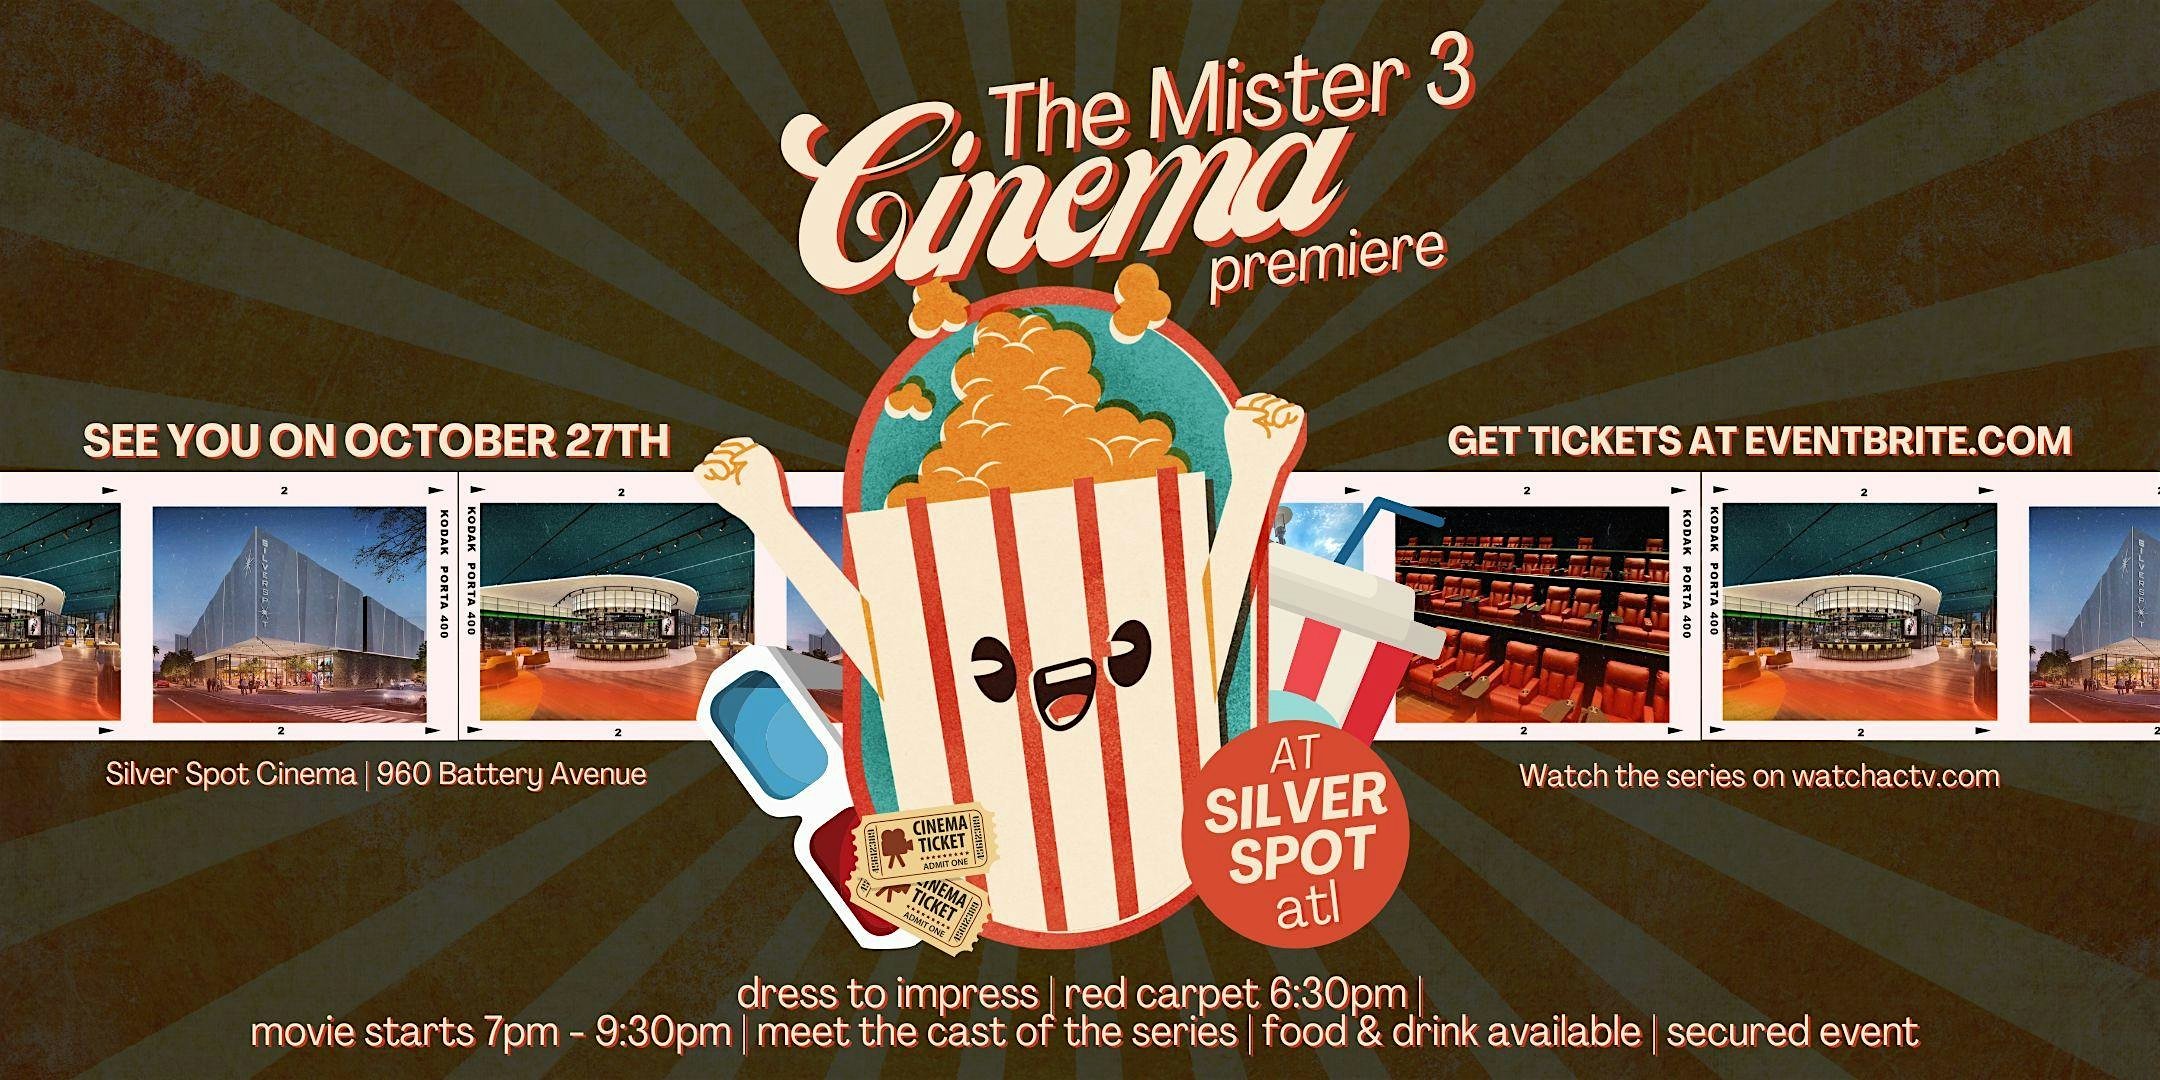 The Mister 3 Cinema Premiere